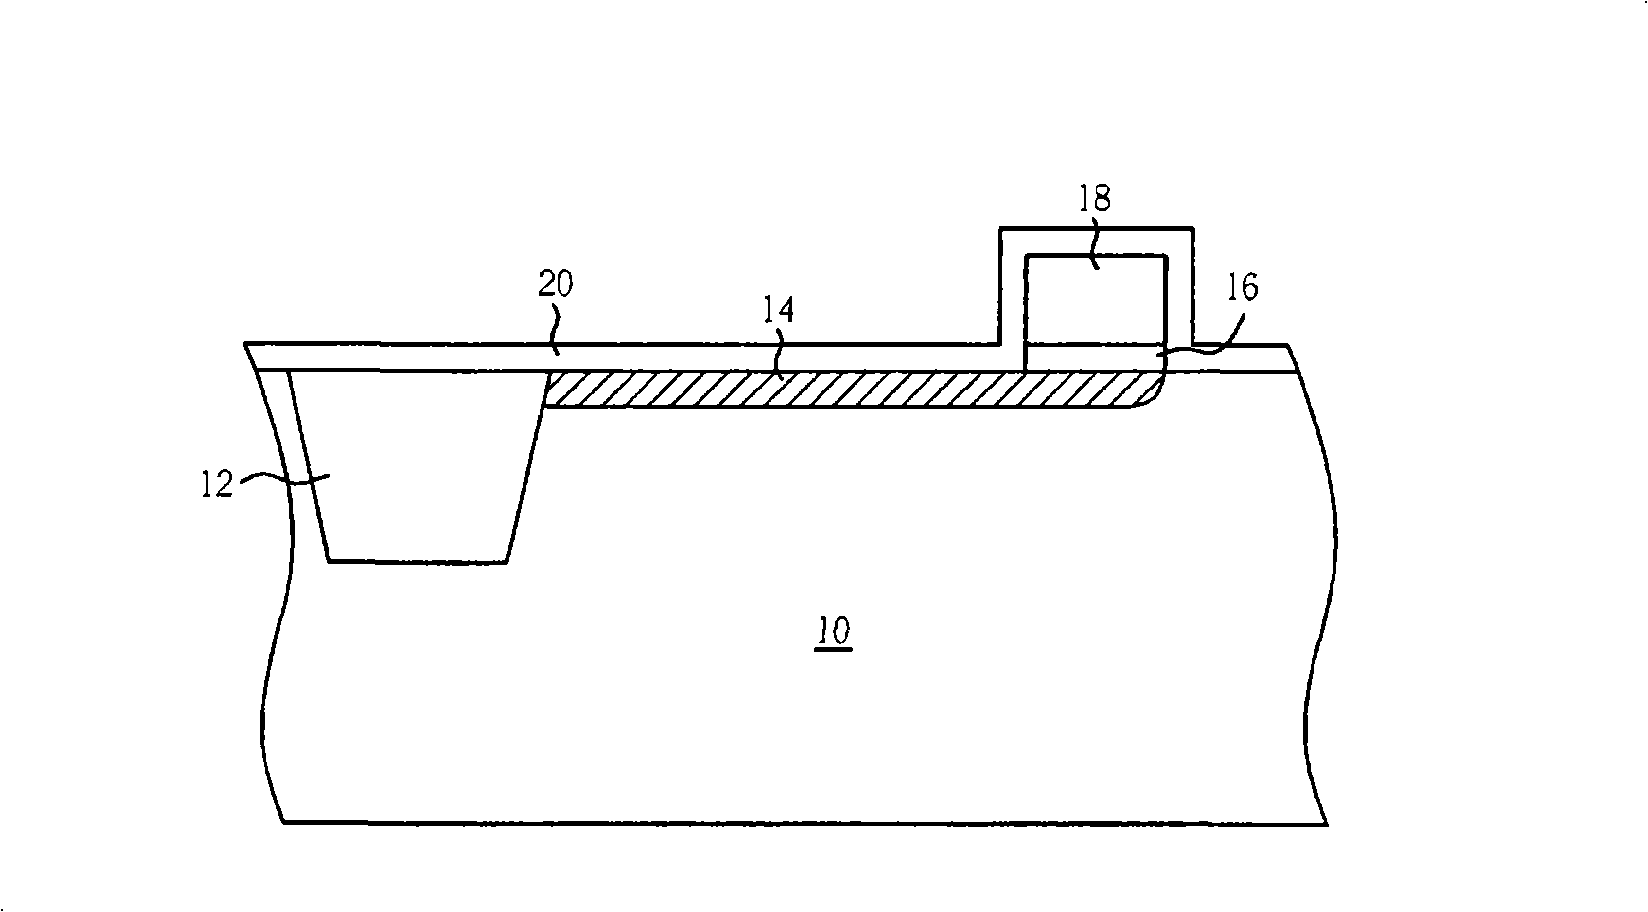 Production method of light sensitive diode